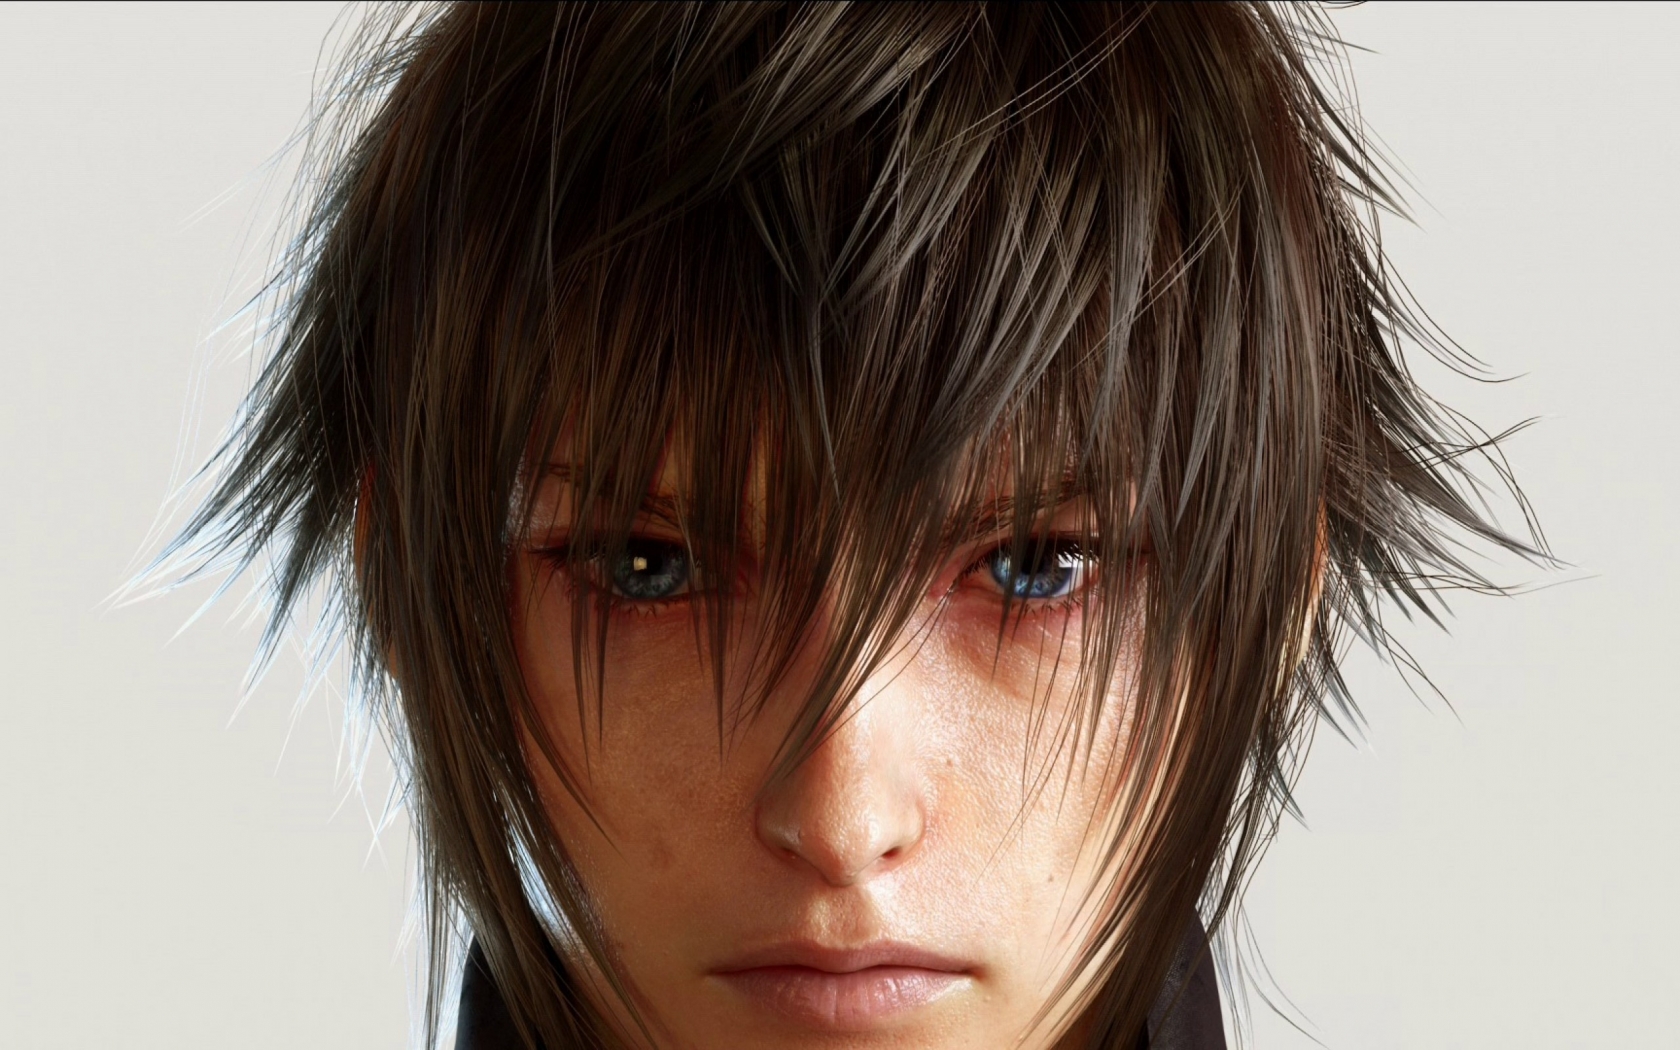 Final Fantasy XV Close Details for 1680 x 1050 widescreen resolution